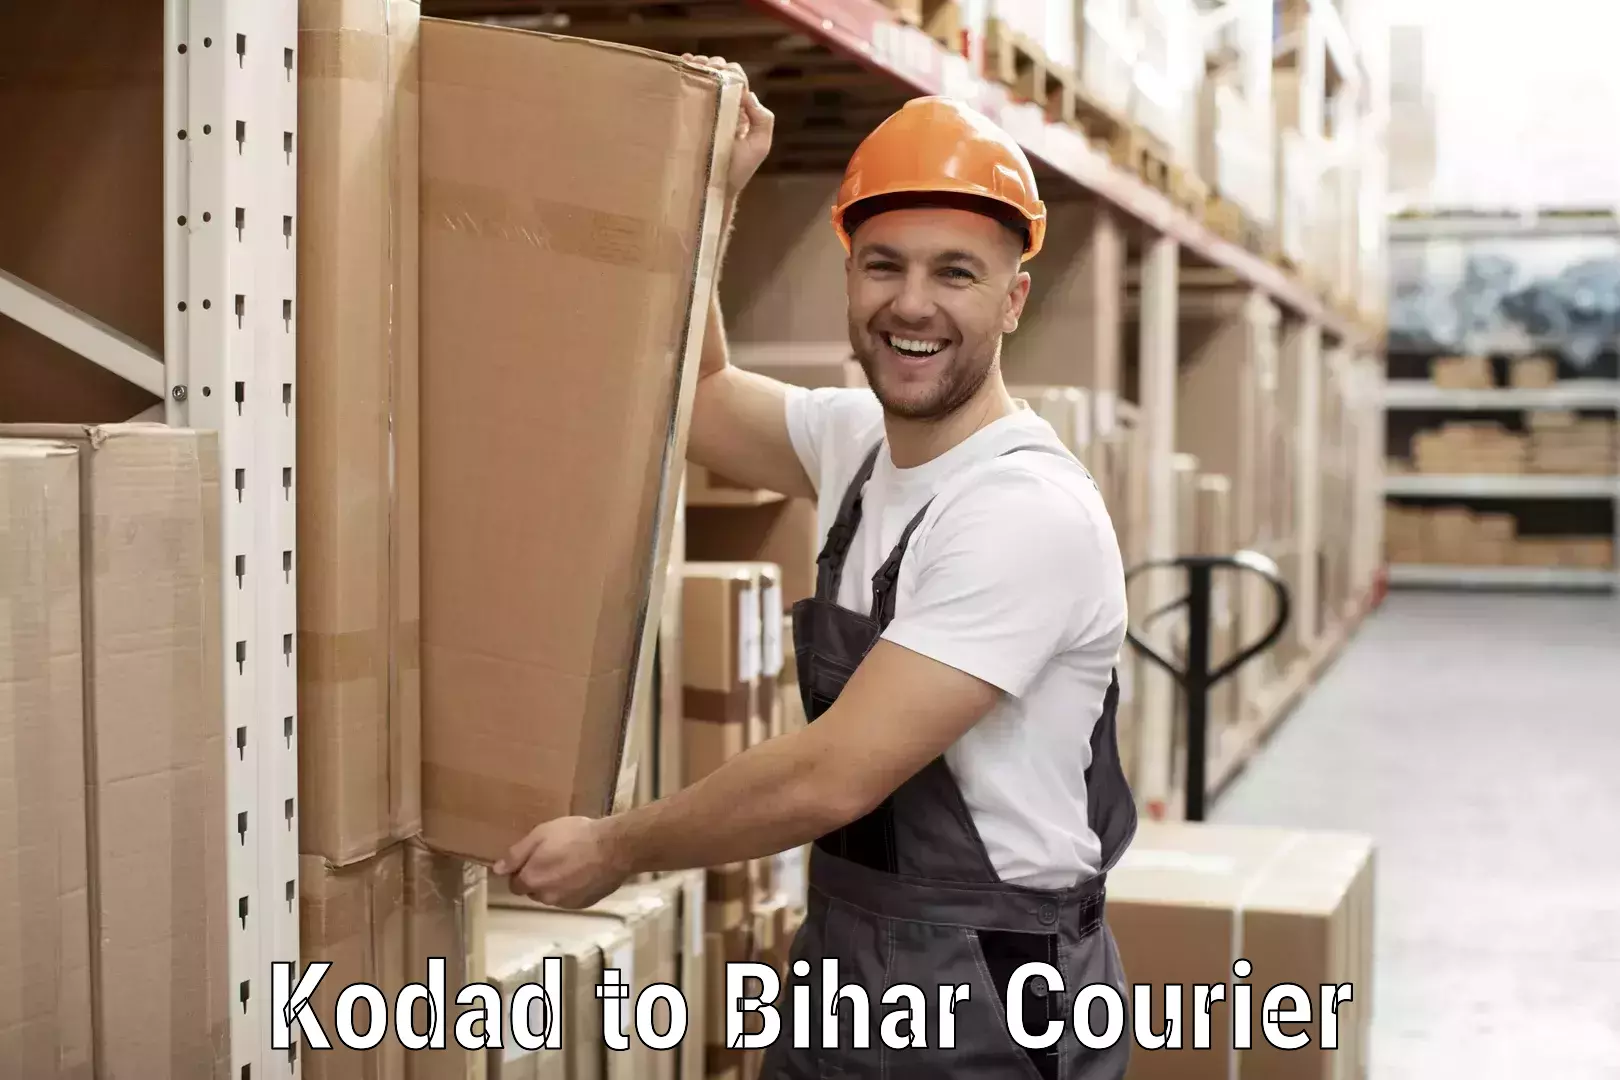 Courier service comparison Kodad to Barh